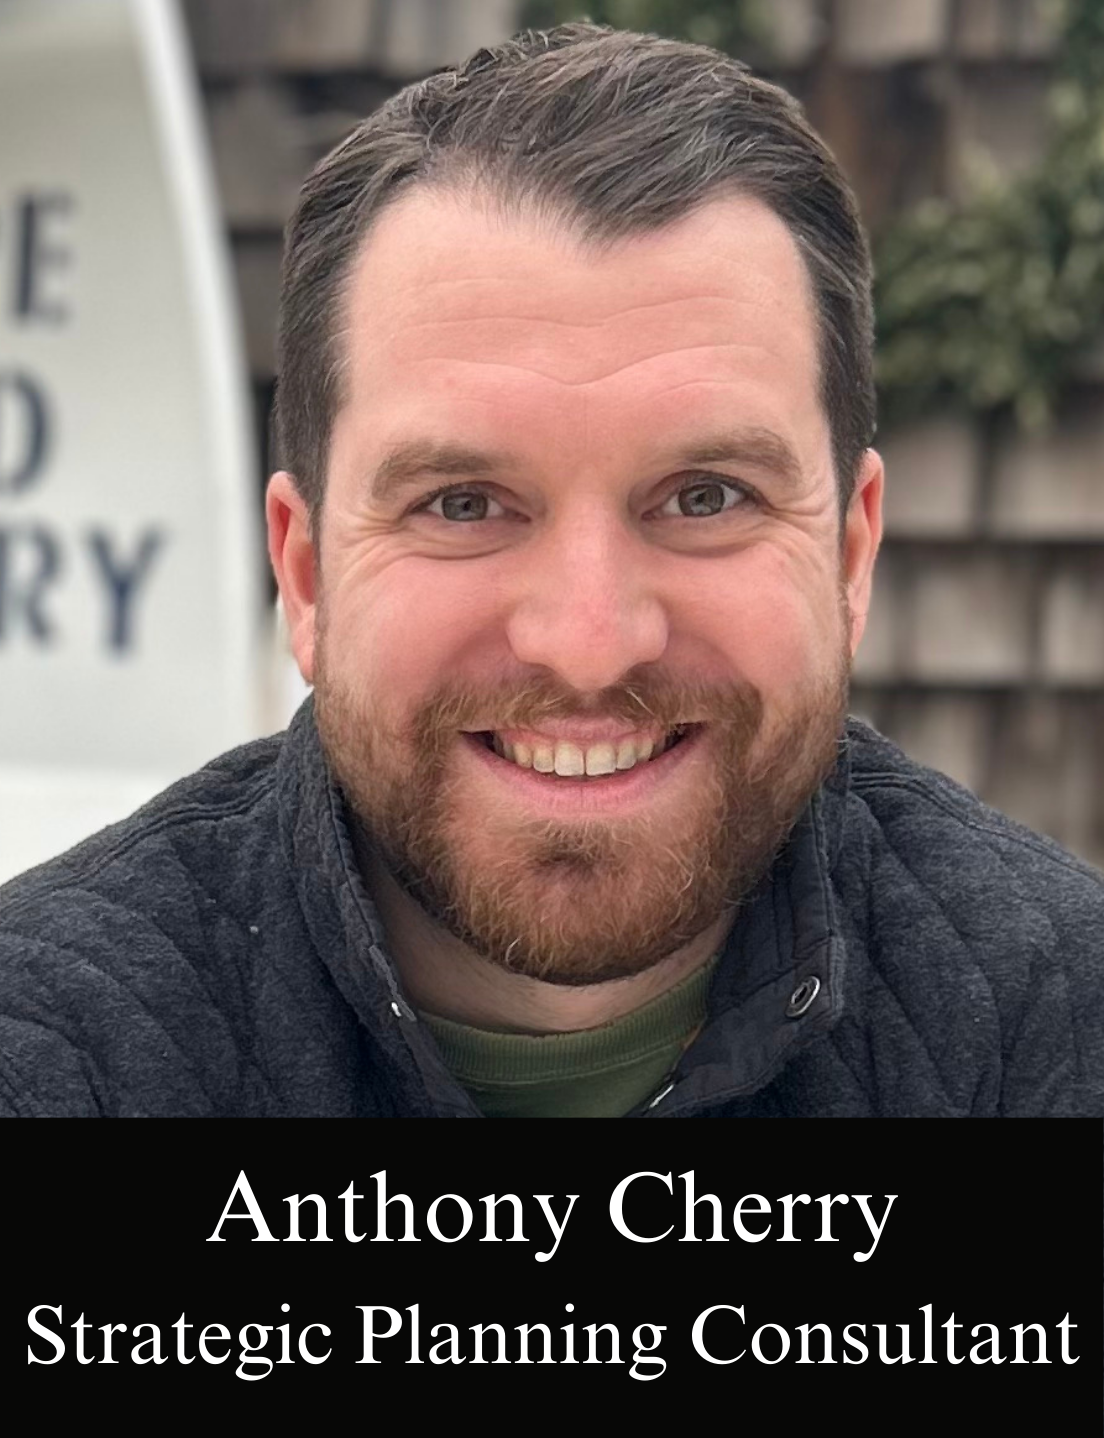 Anthony Cherry